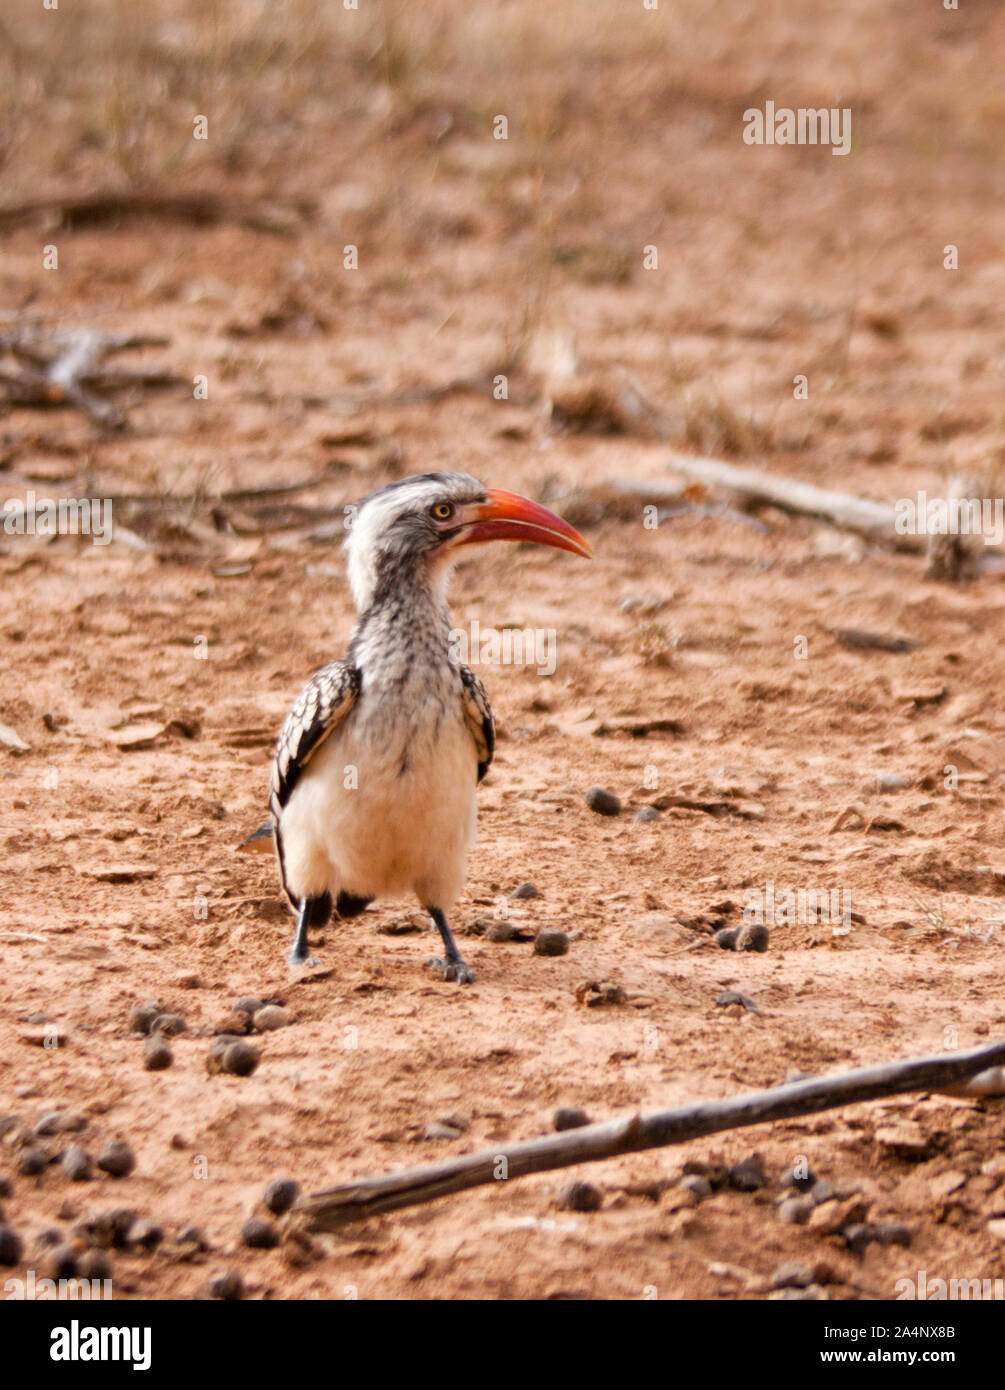 Hornbill uccelli sulla sabbia sul terreno, Botswana, Africa. Foto Stock